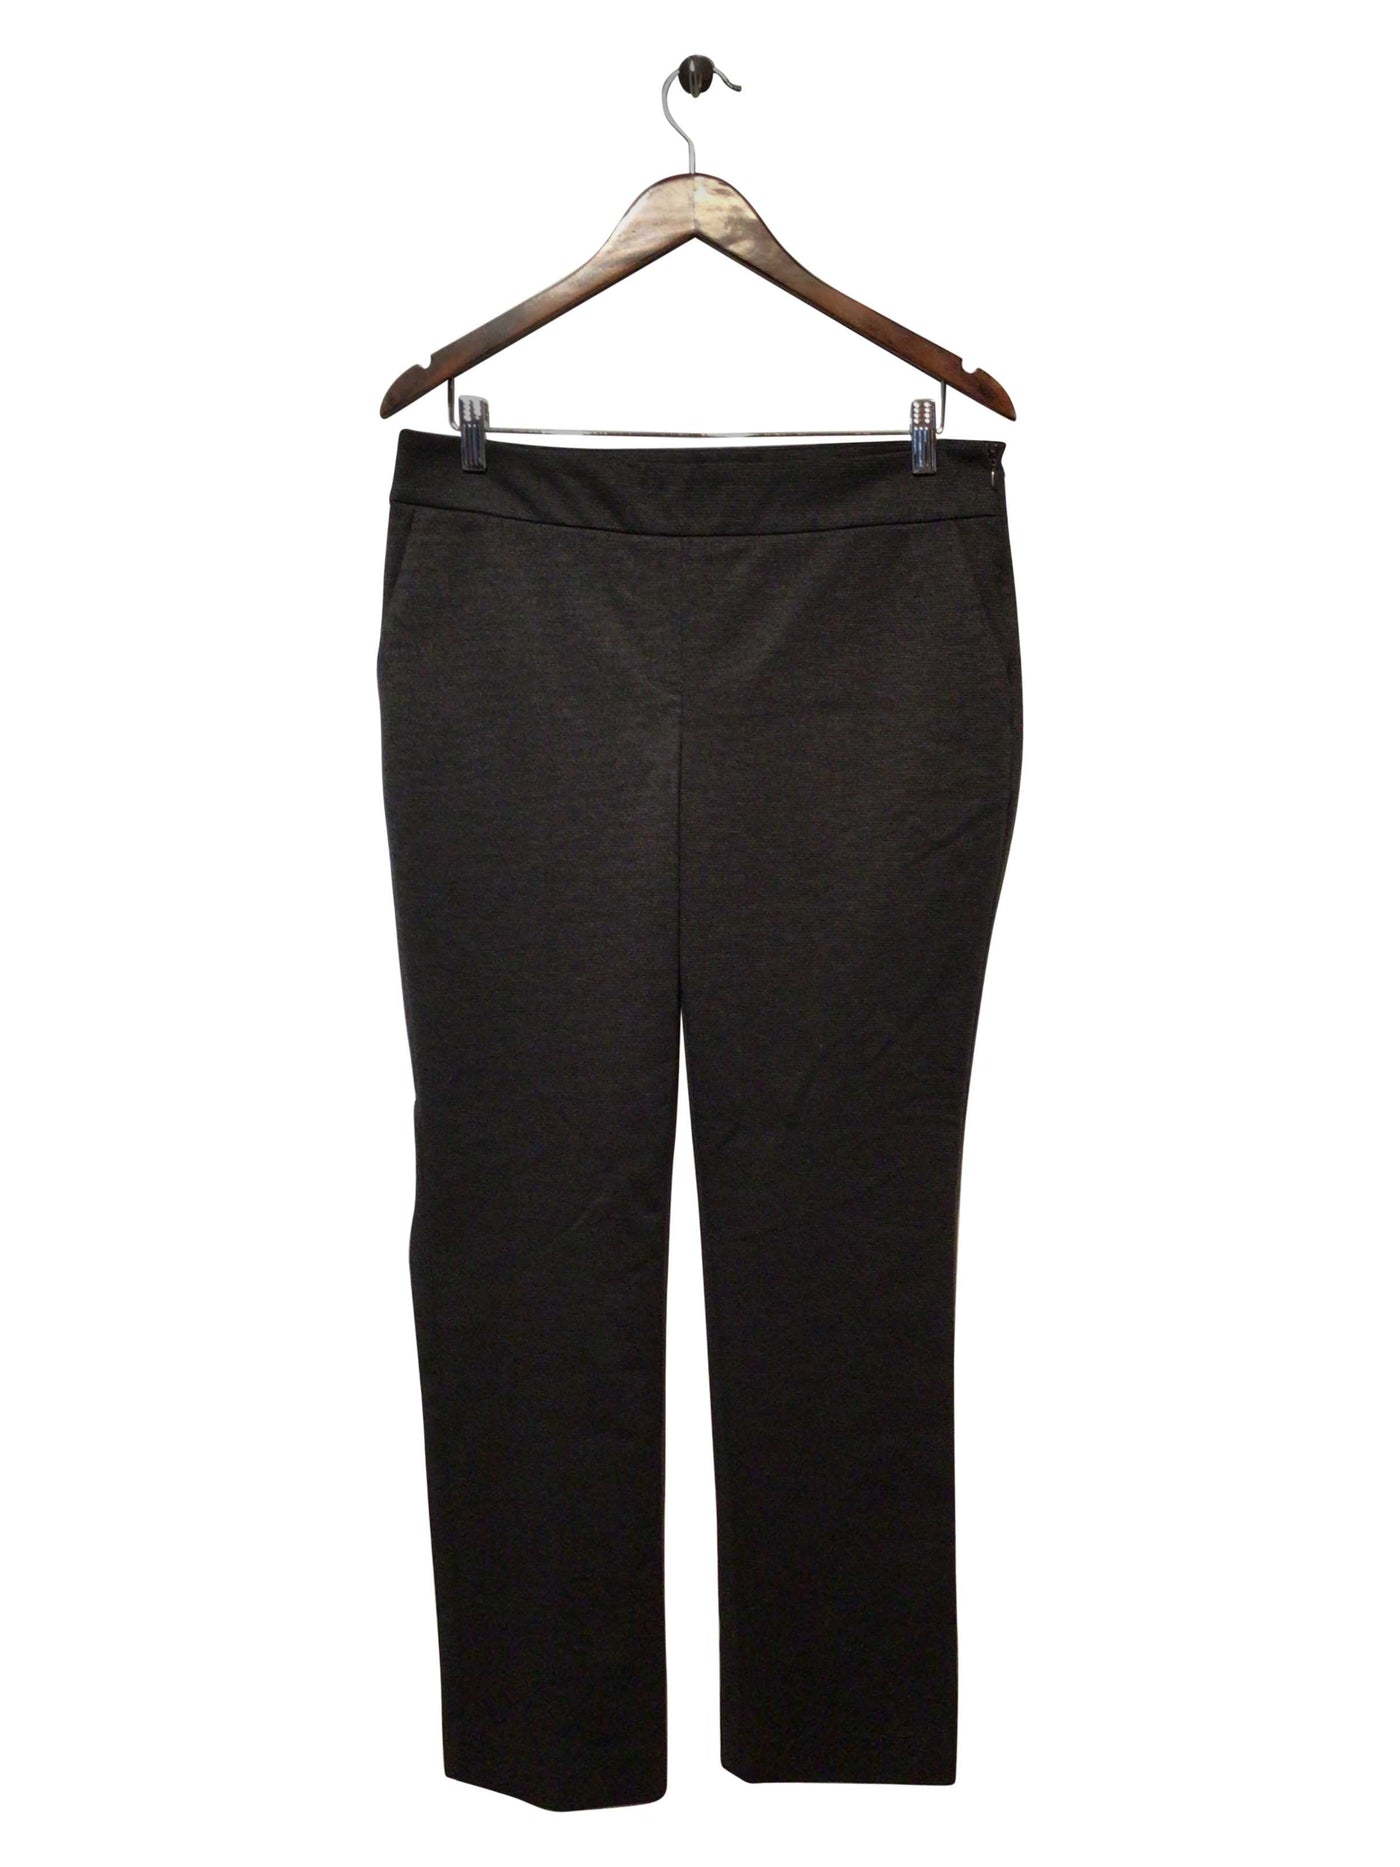 CHATEAU Regular fit Pant in Gray  -  8  13.99 Koop